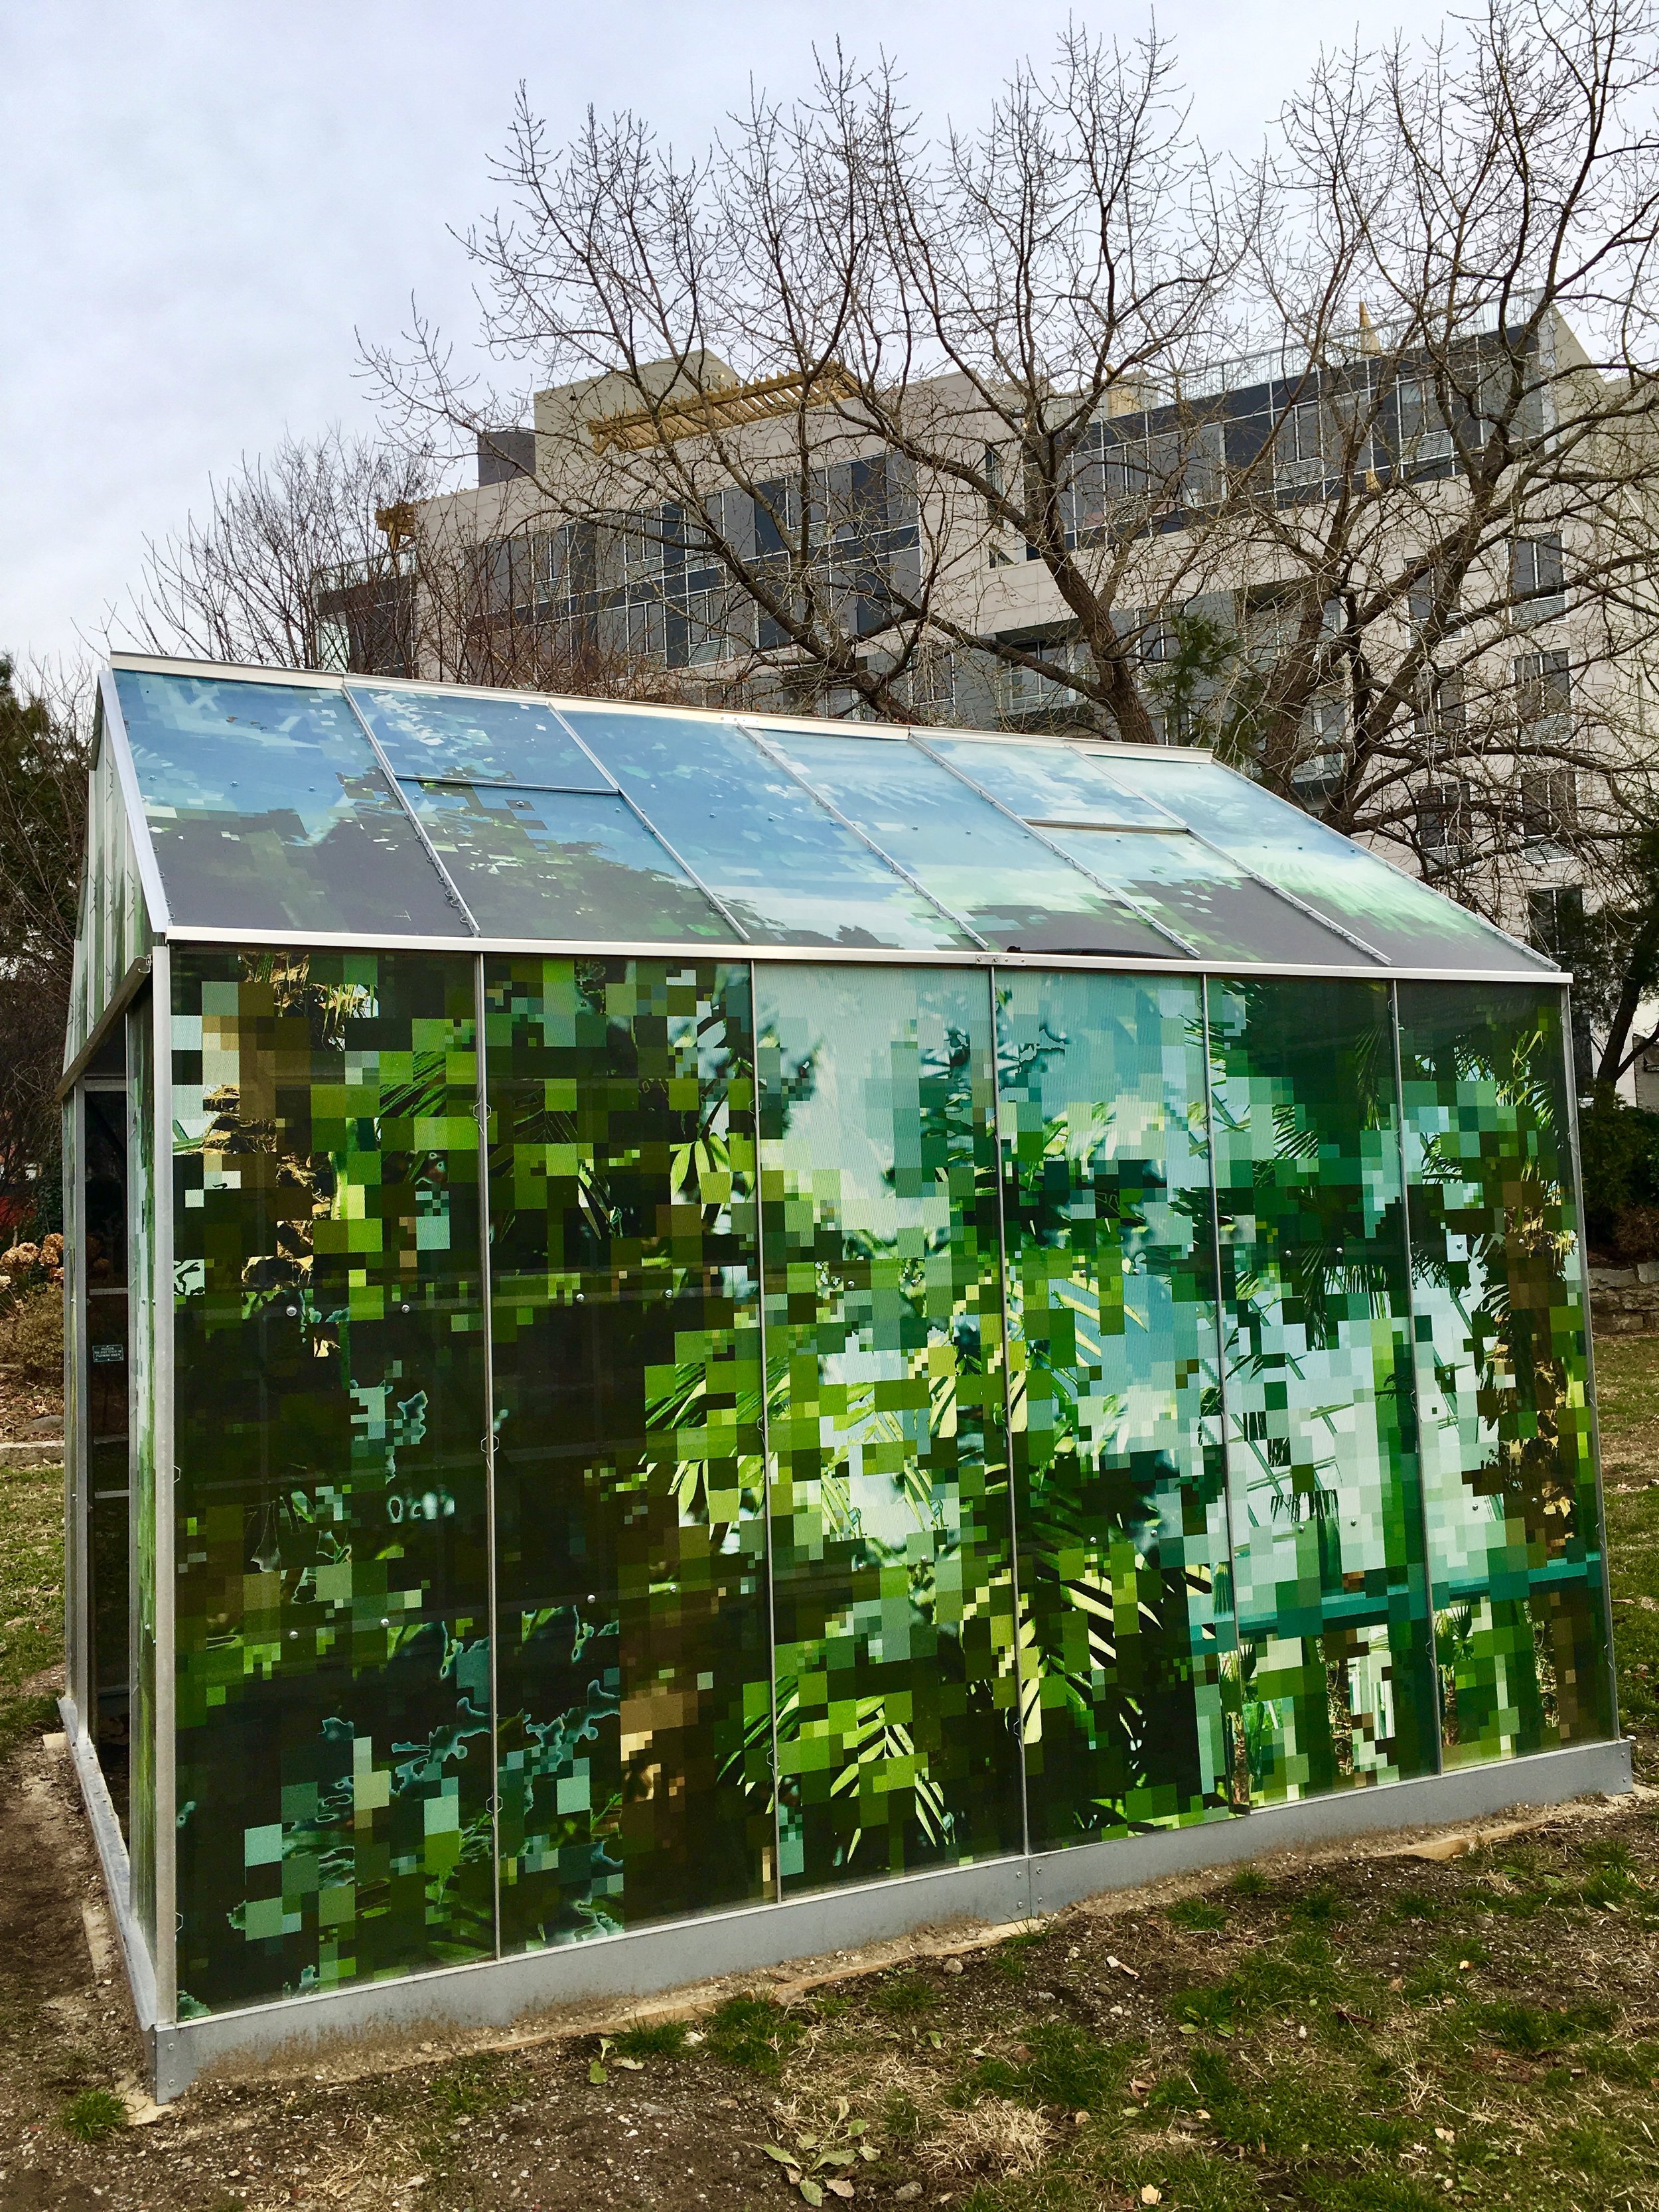  This greenhouse seen at Socrates Sculpture Park is artist Joiri Minaya’s work “Tropticon.” 